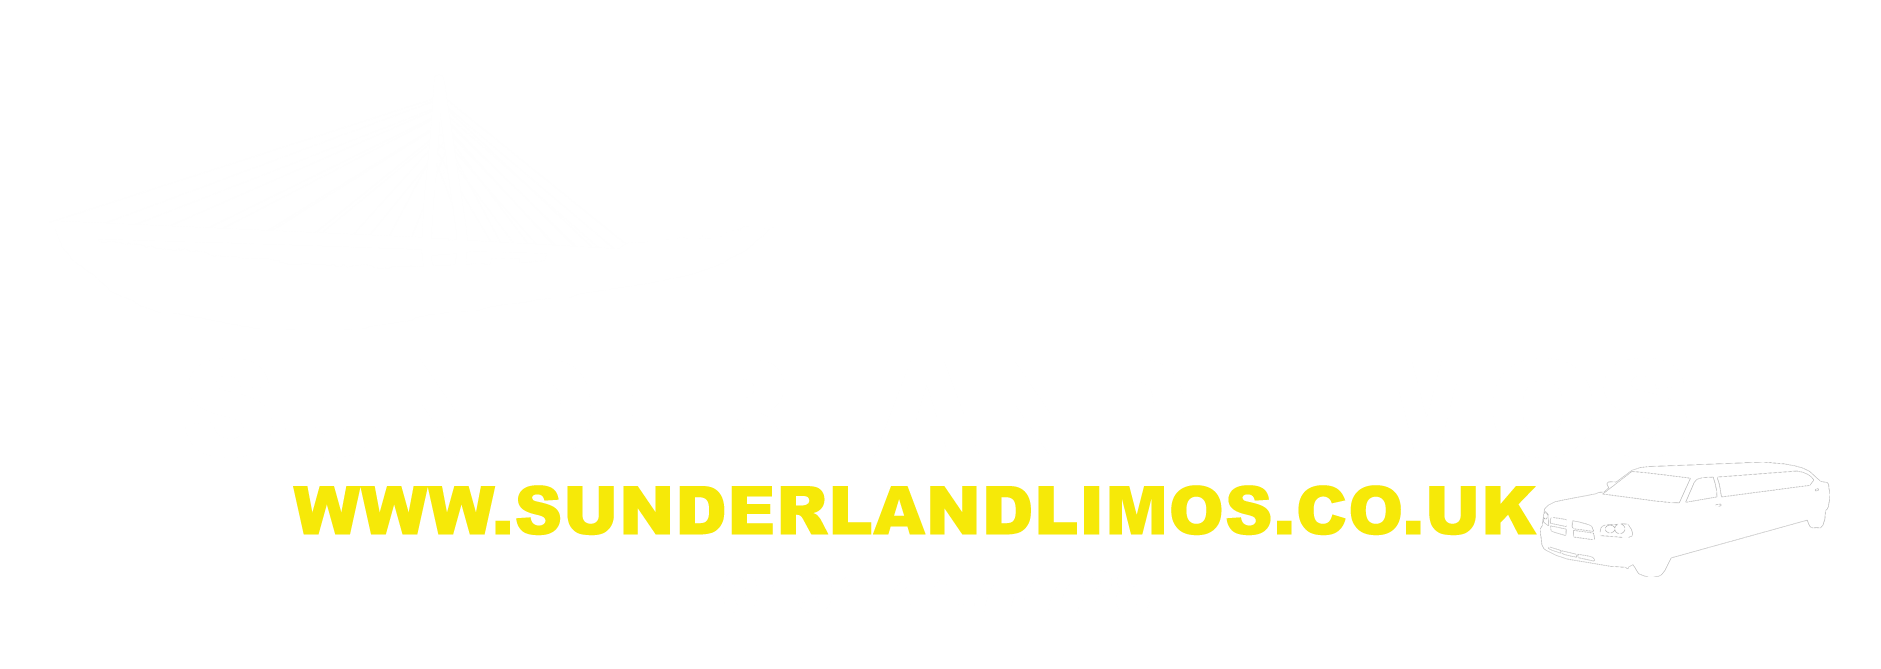 Sunderland limos 01914477728